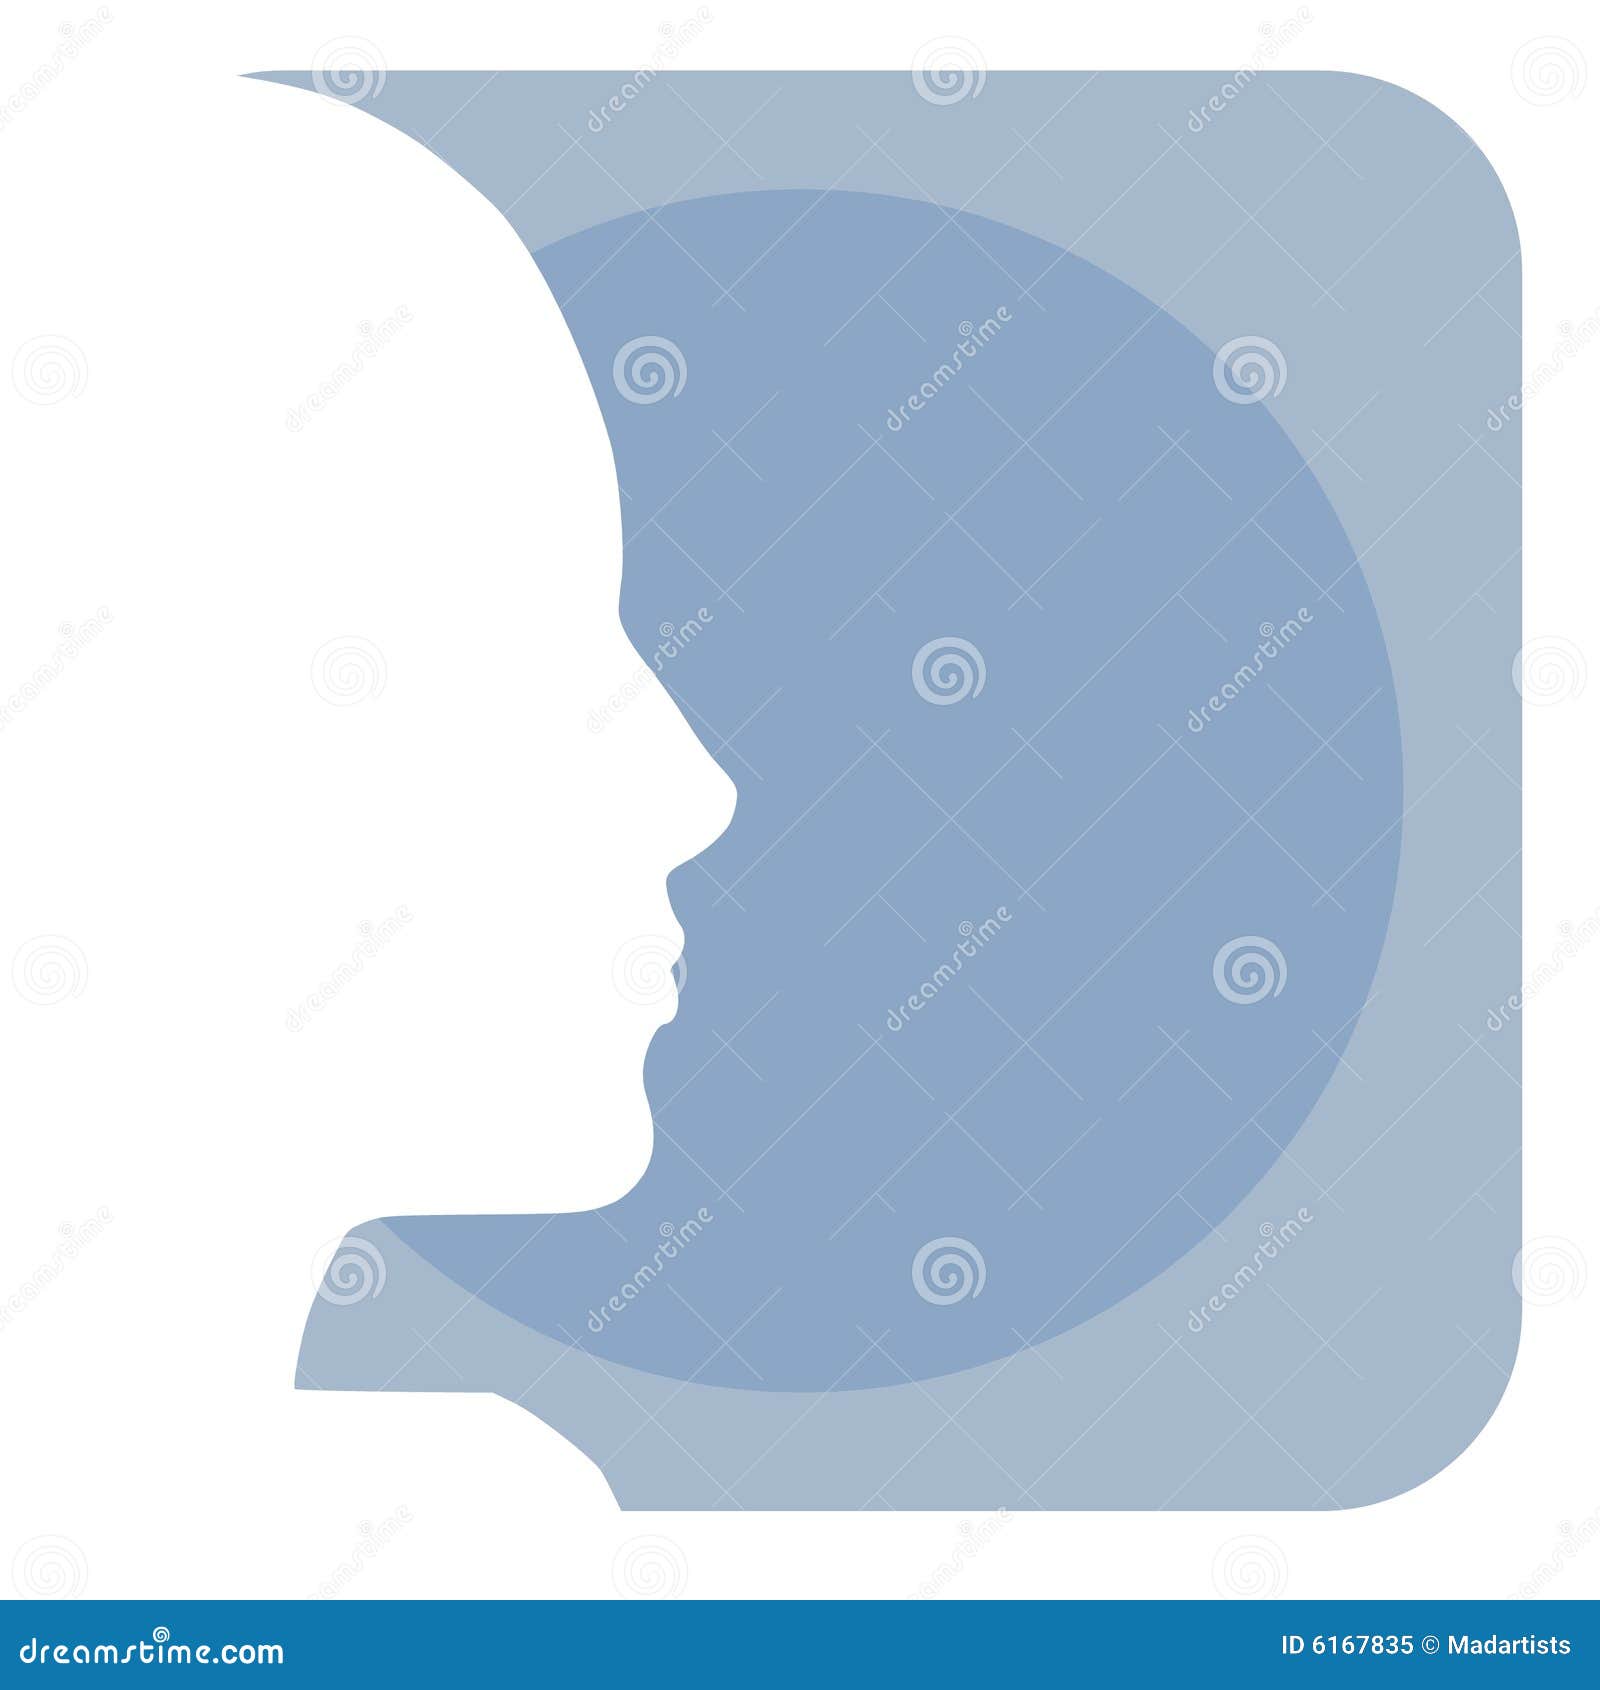 female head profile background